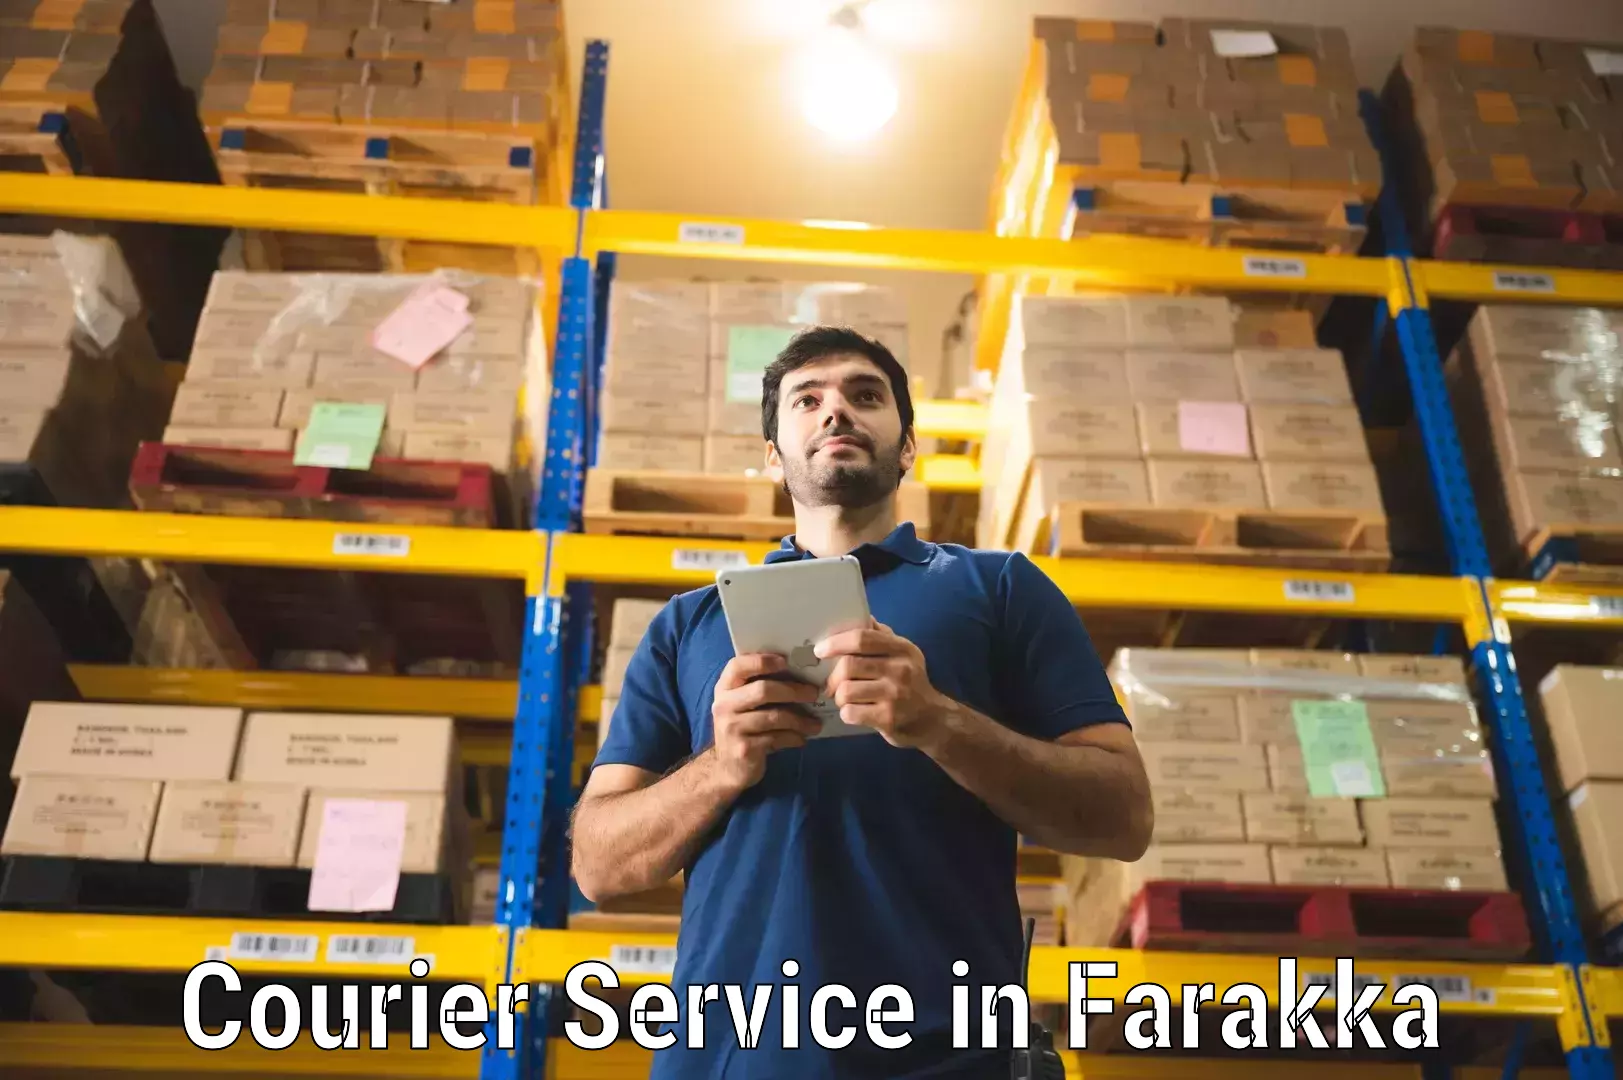 Express courier capabilities in Farakka